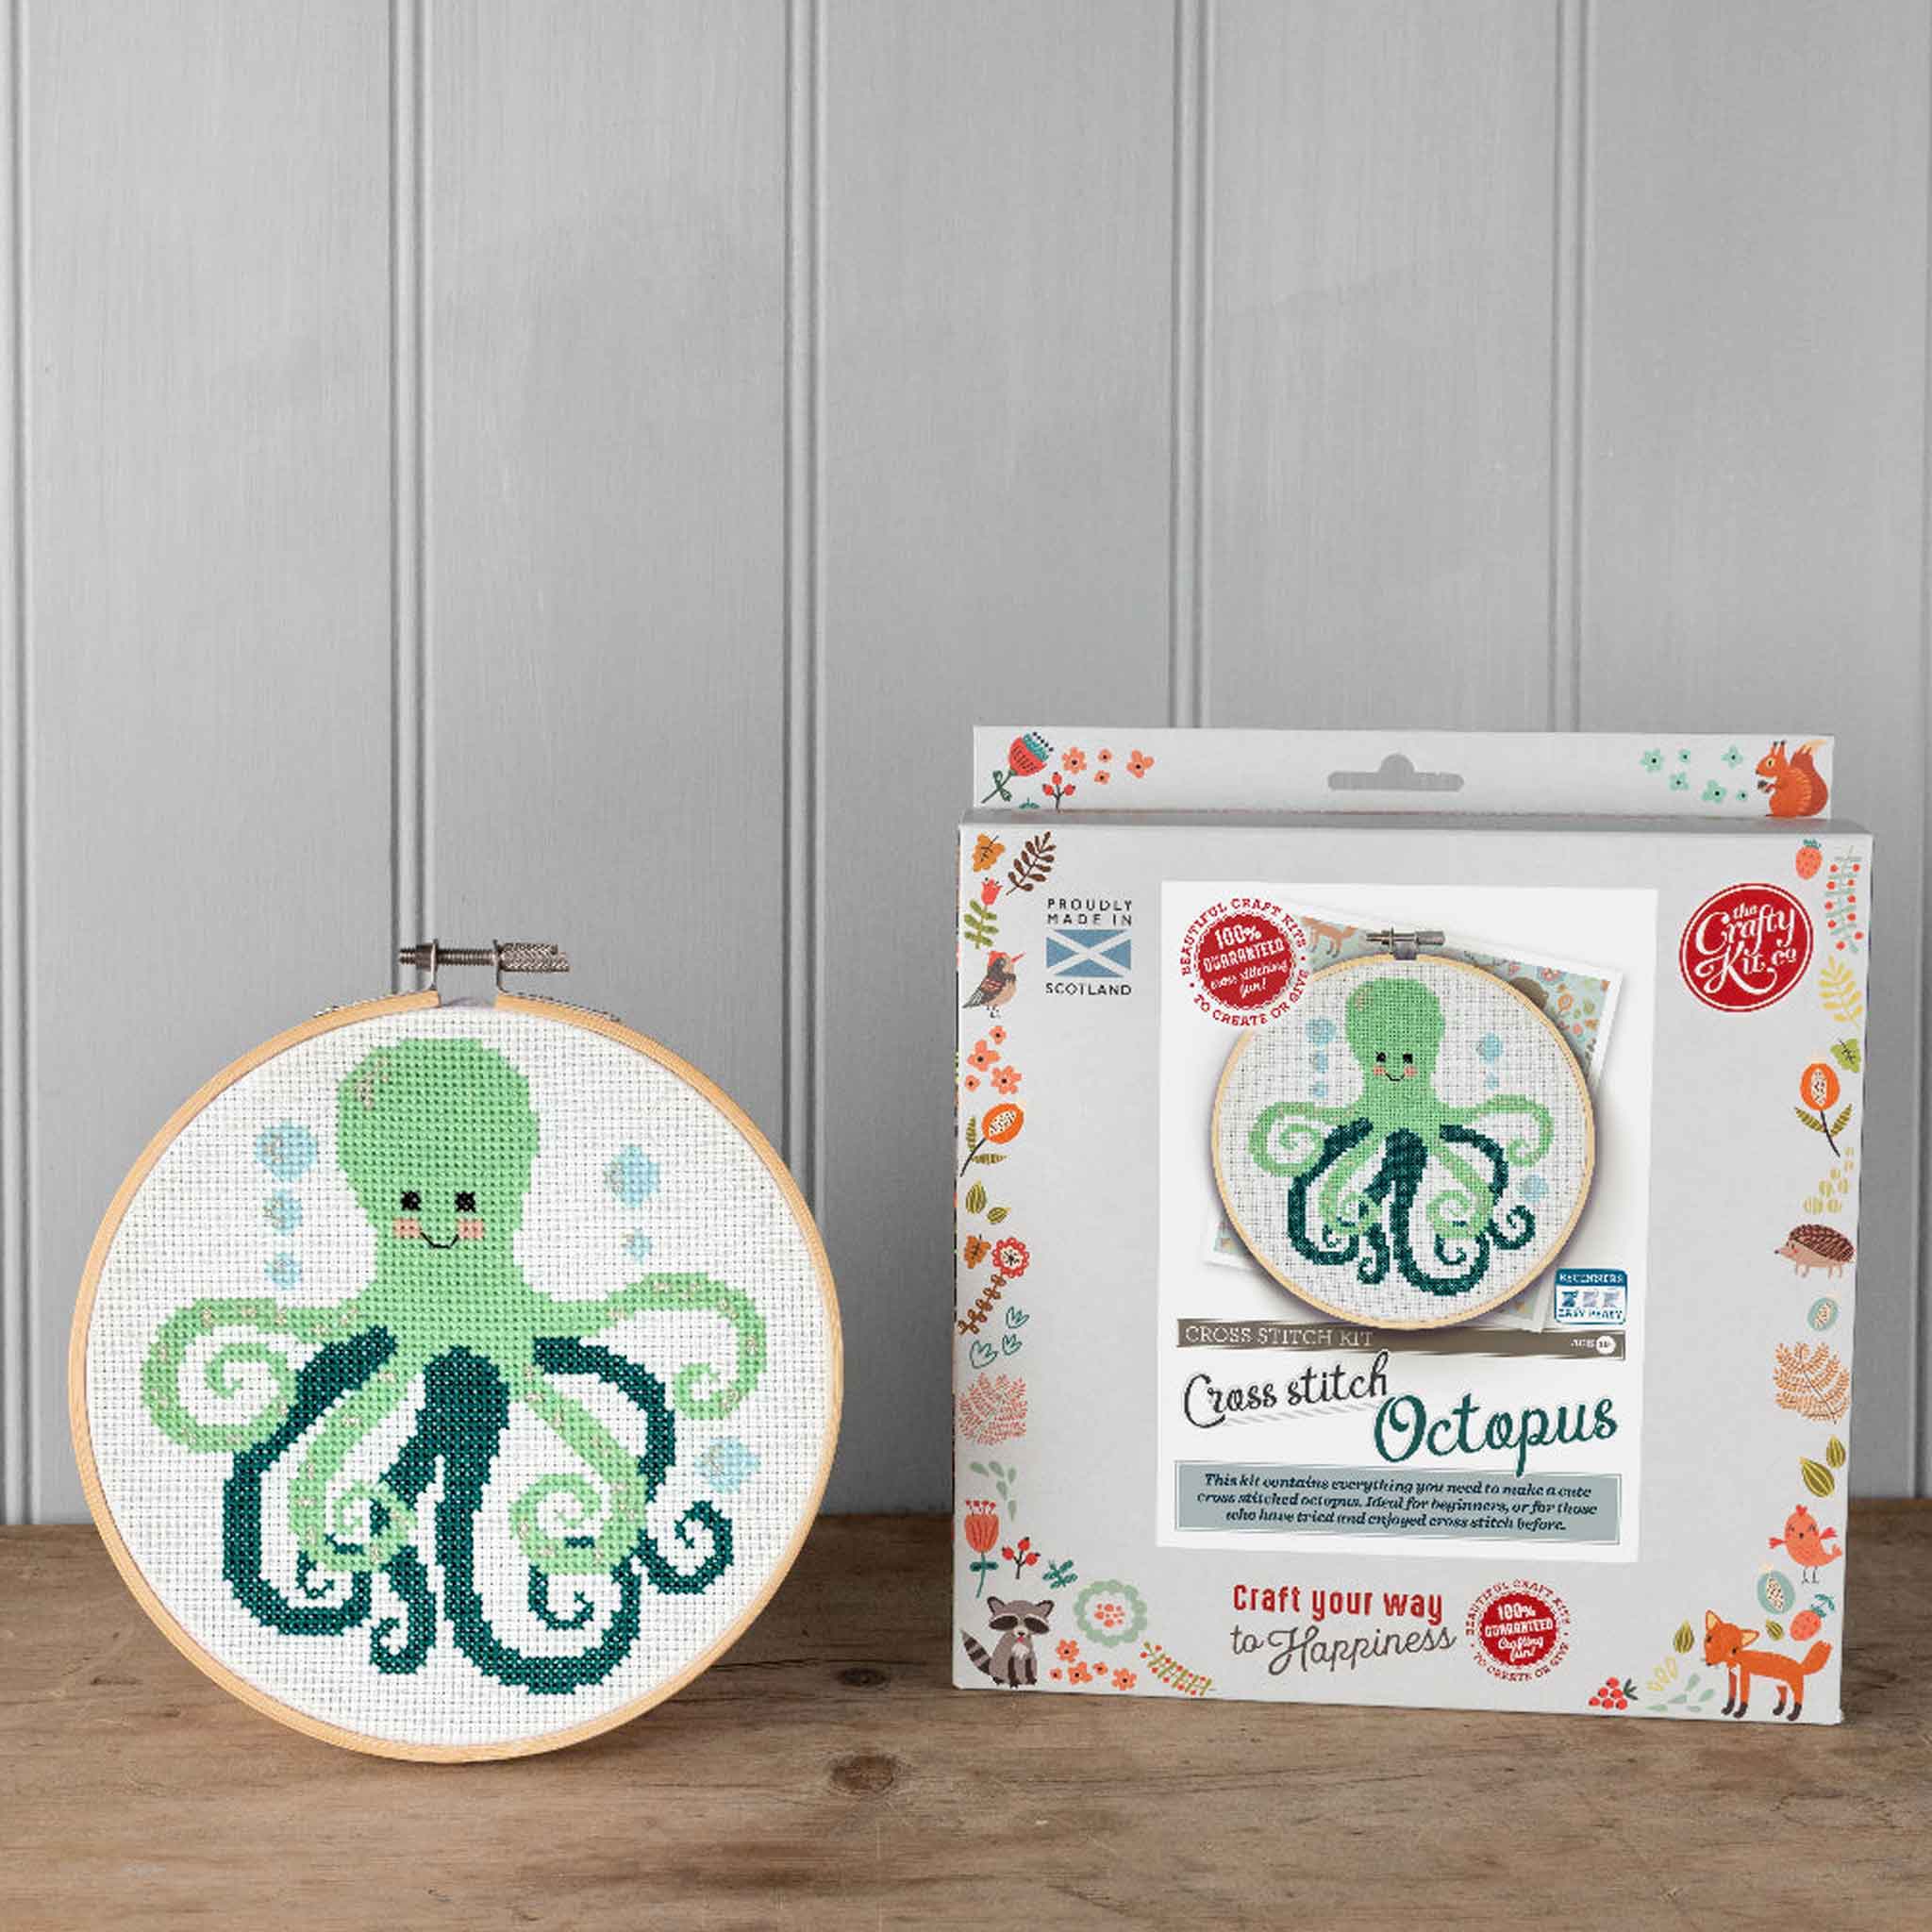 Green Octopus Cross Stitch - The Crafty Kit Company